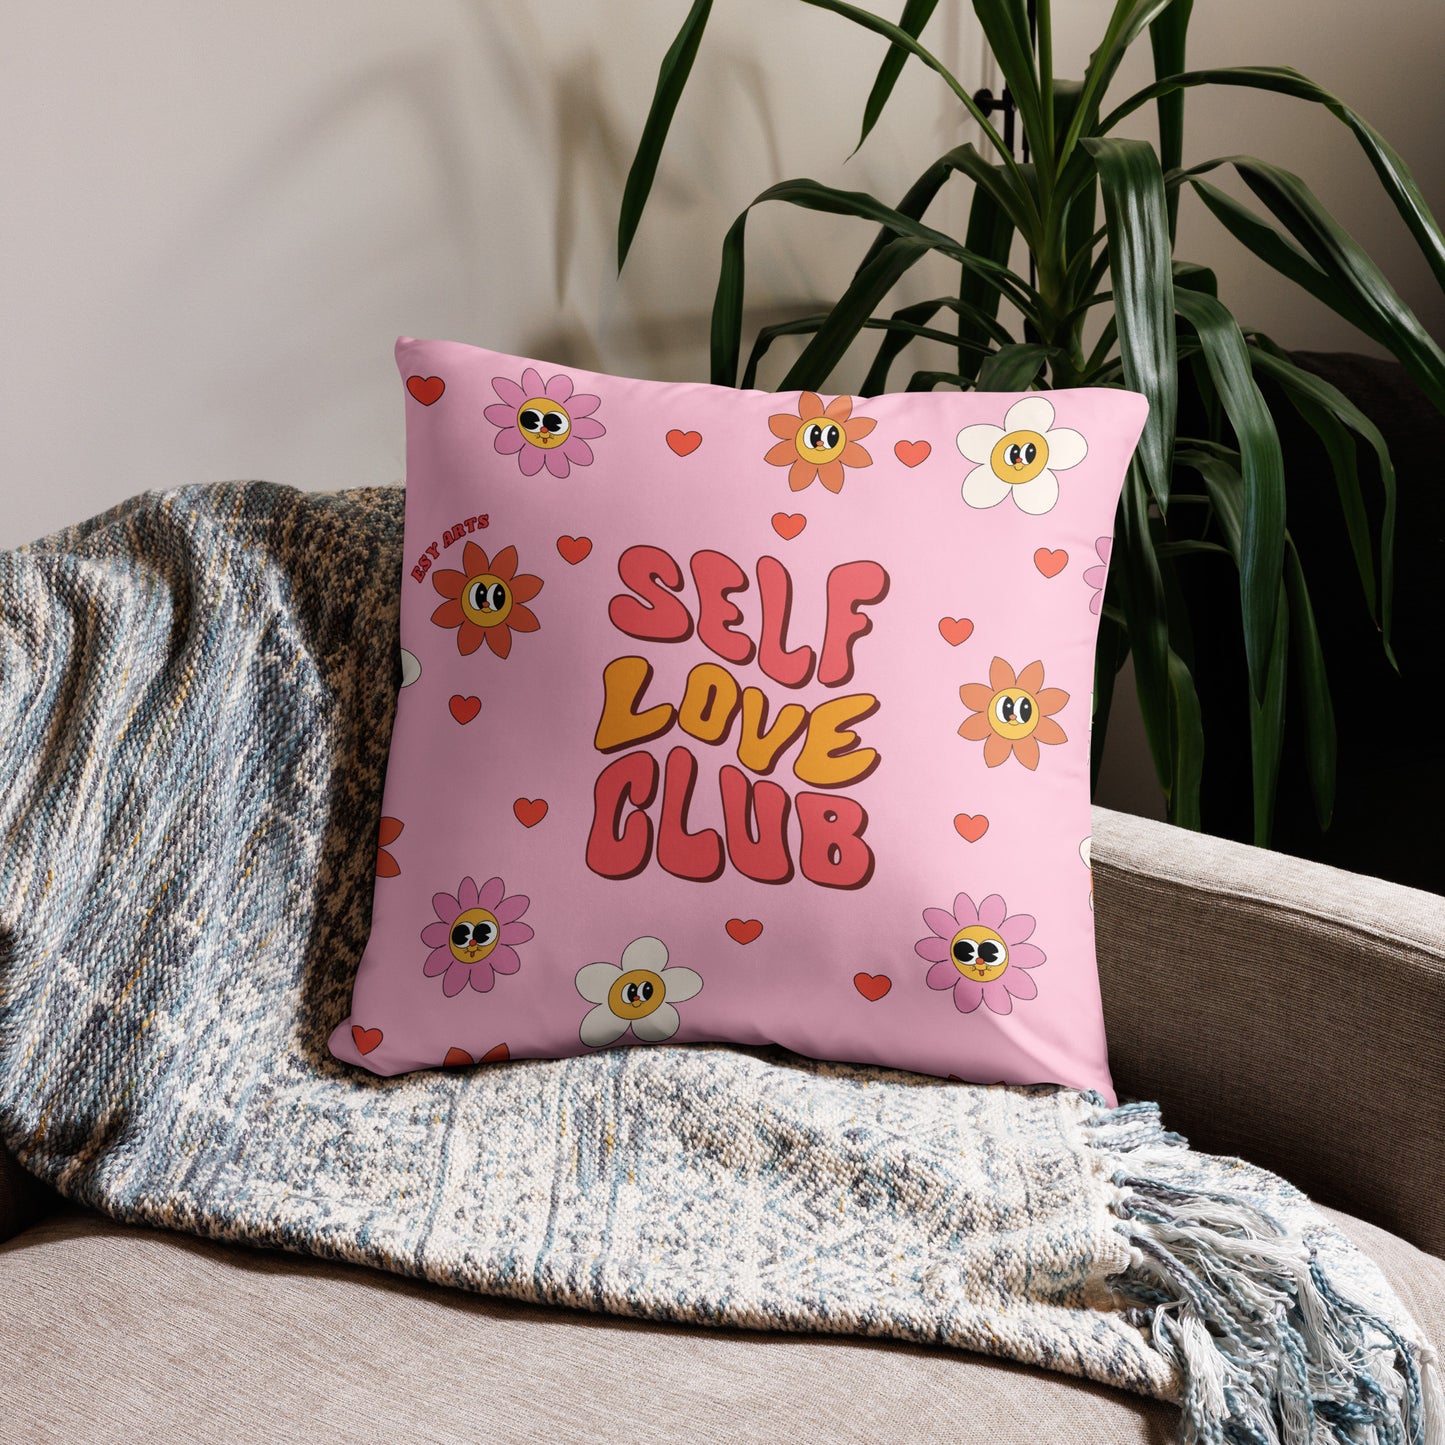 Self Love Club 22 x 22 Pillow